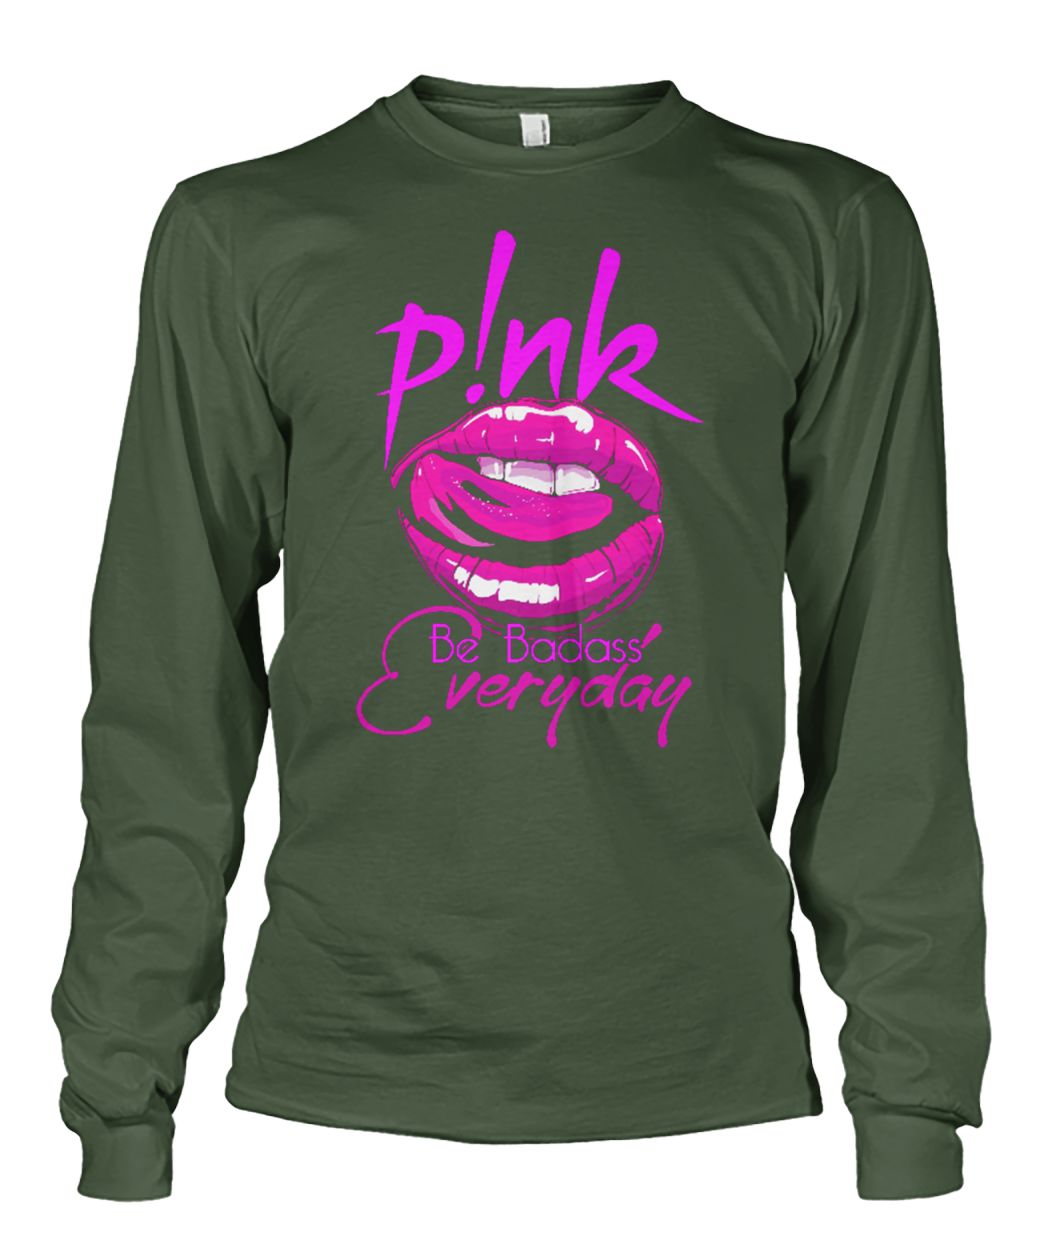 Be badass everyday singer pink unisex long sleeve